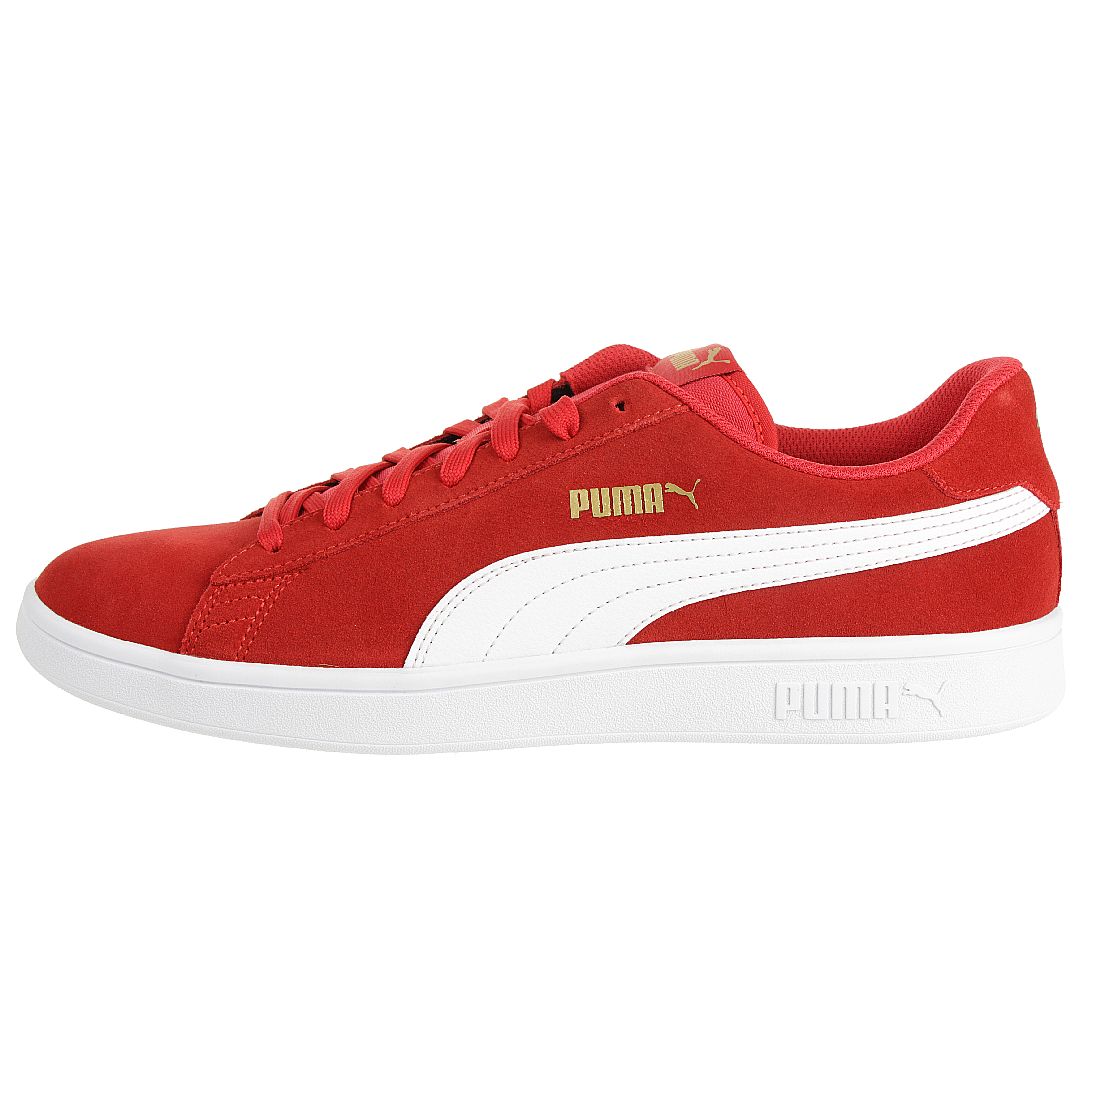 Puma Smash v2 Unisex Sneaker Schuh Rot 364989 22